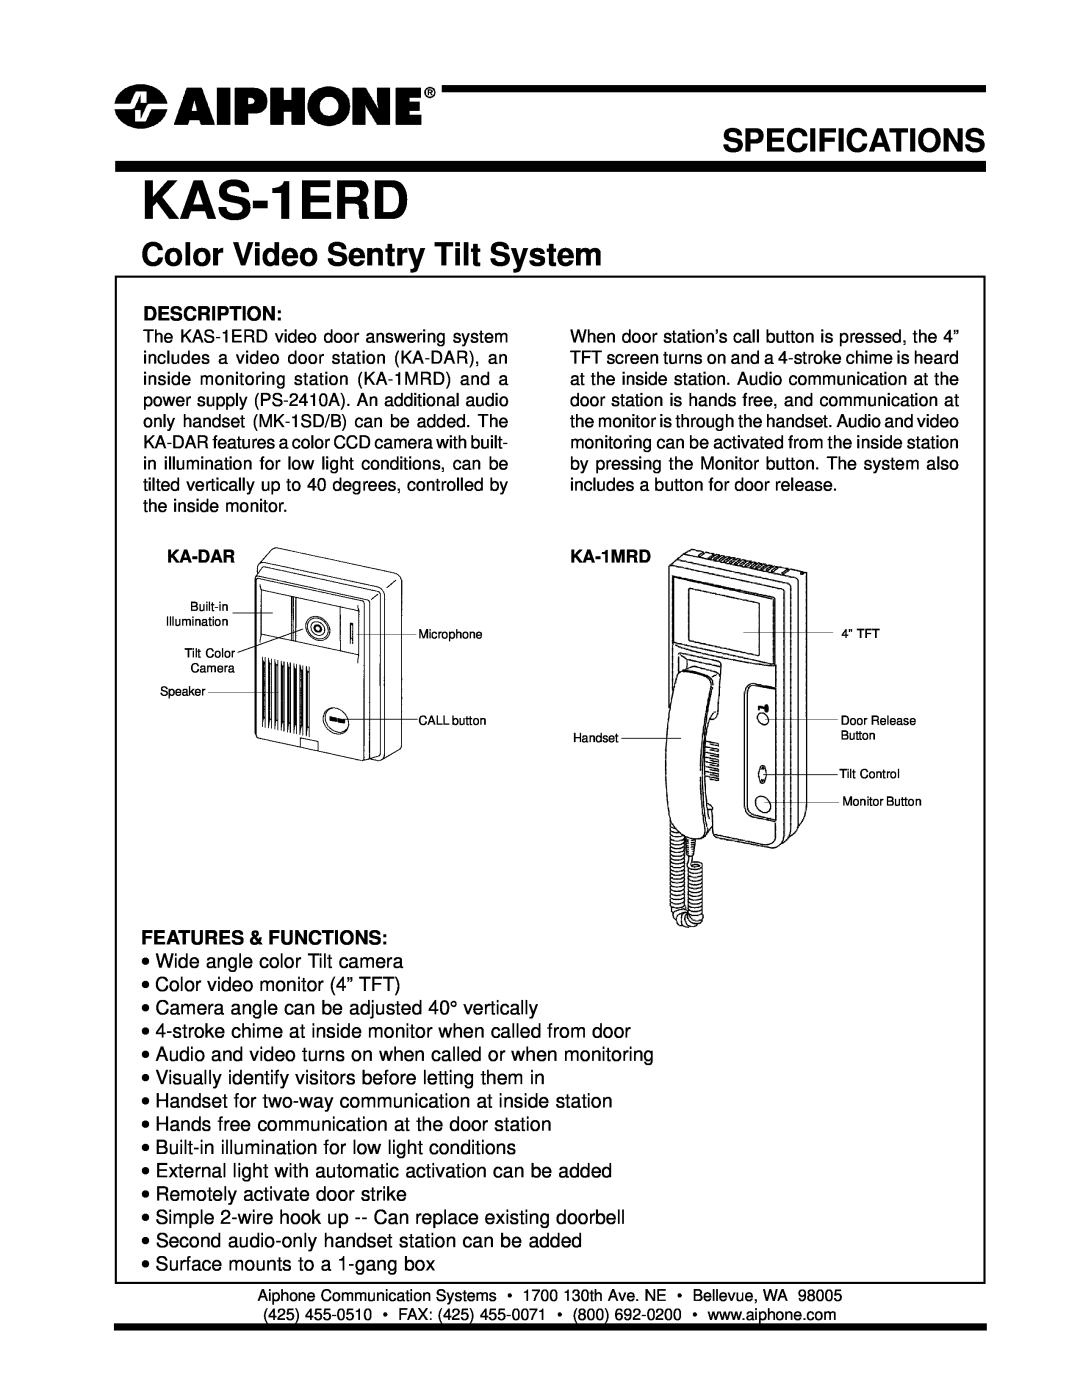 Aiphone KAS-1ERD specifications Description, Features & Functions, Specifications, Color Video Sentry Tilt System 